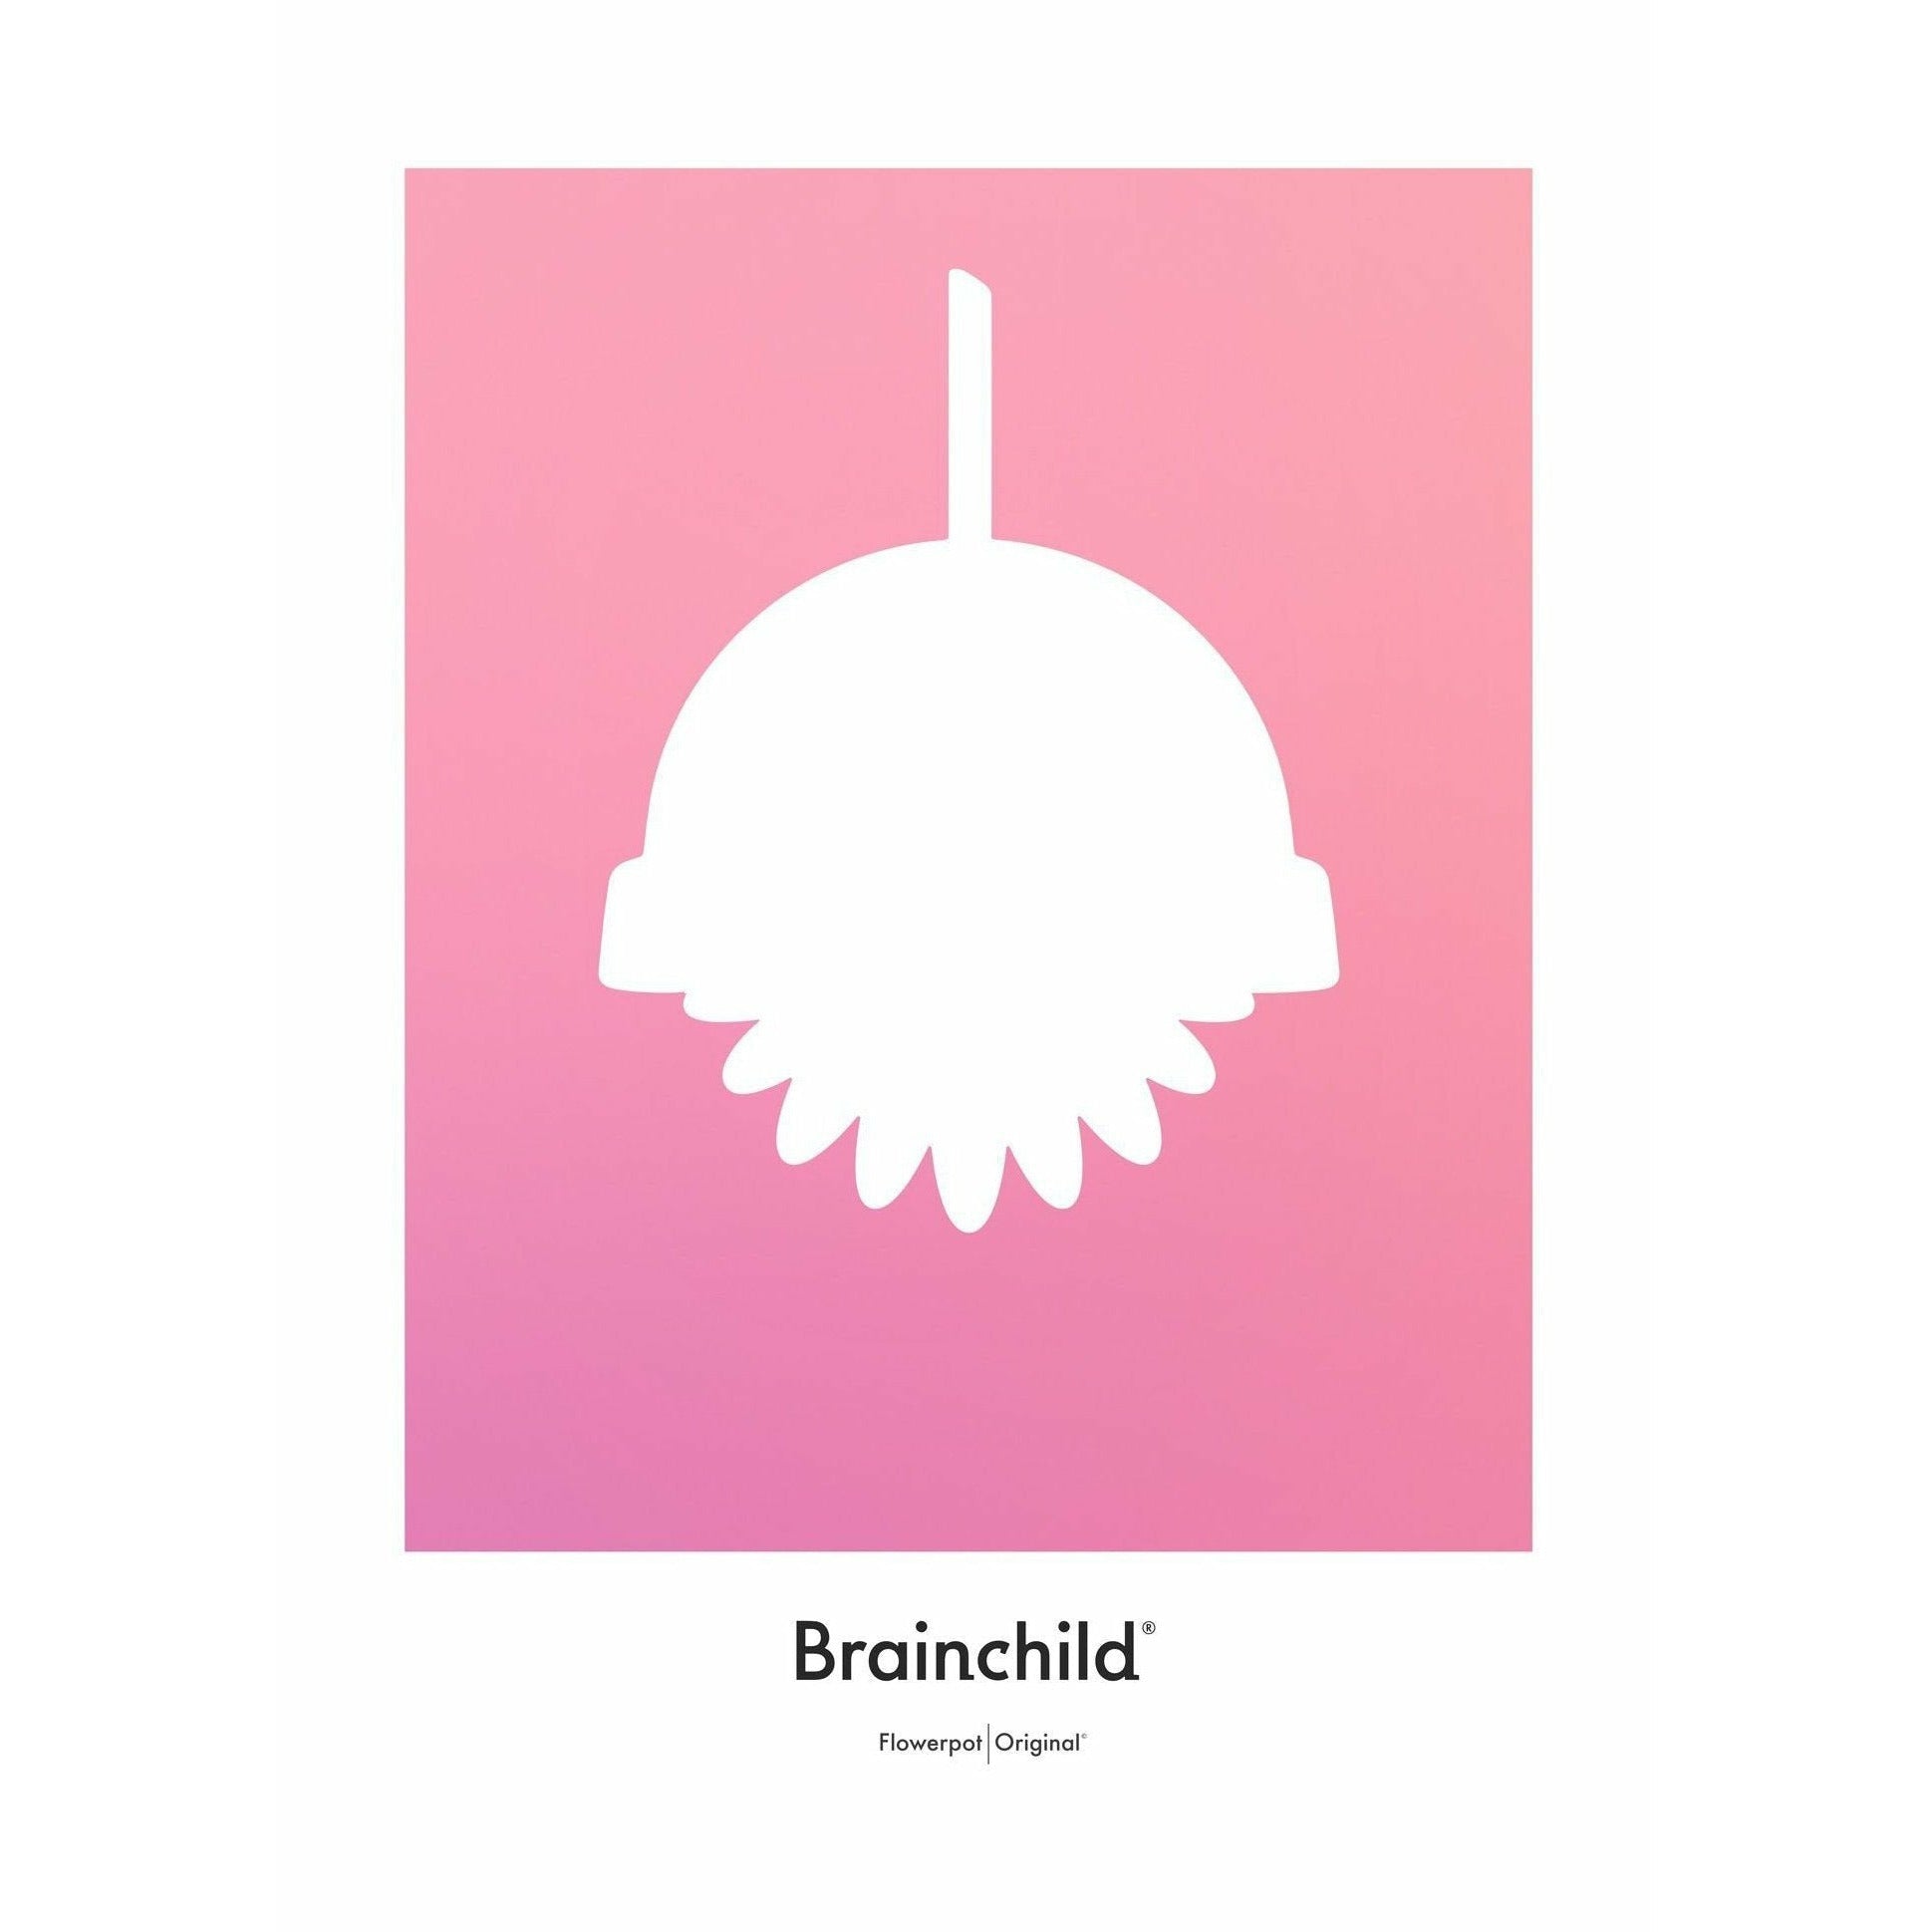 Brainchild Blumentopf Design Icon Poster ohne Rahmen 30 X40 Cm, Rosa